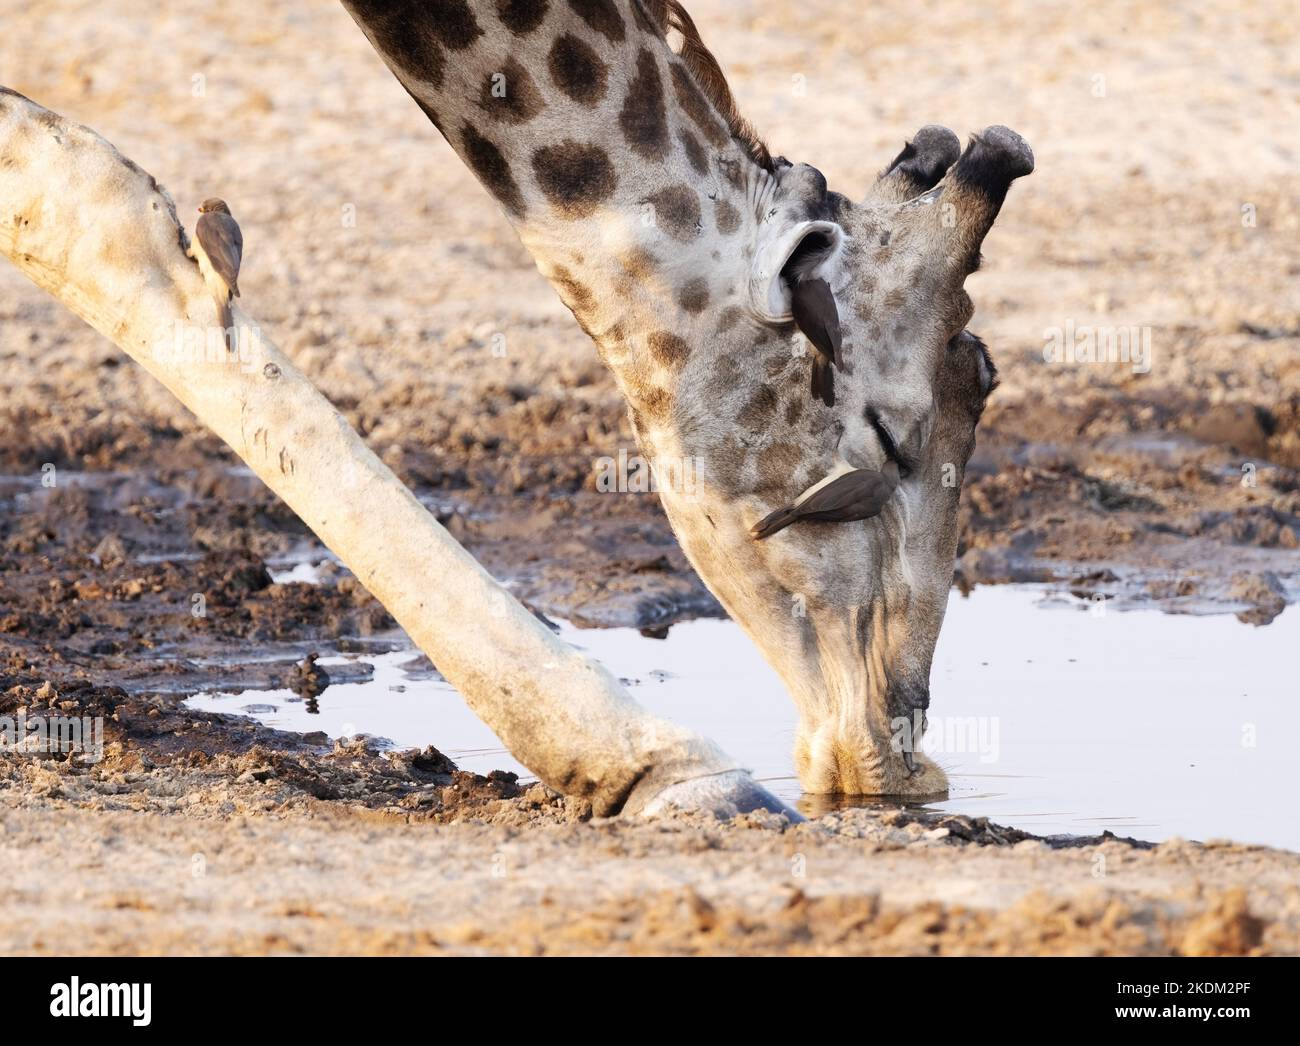 Giraffe Oxpeckers Afrika. Giraffen trinken mit Rotschnabelvögeln, Buphagus erythrorhynchus auf Kopf und Bein, Chobe-Nationalpark, Botsuana Stockfoto